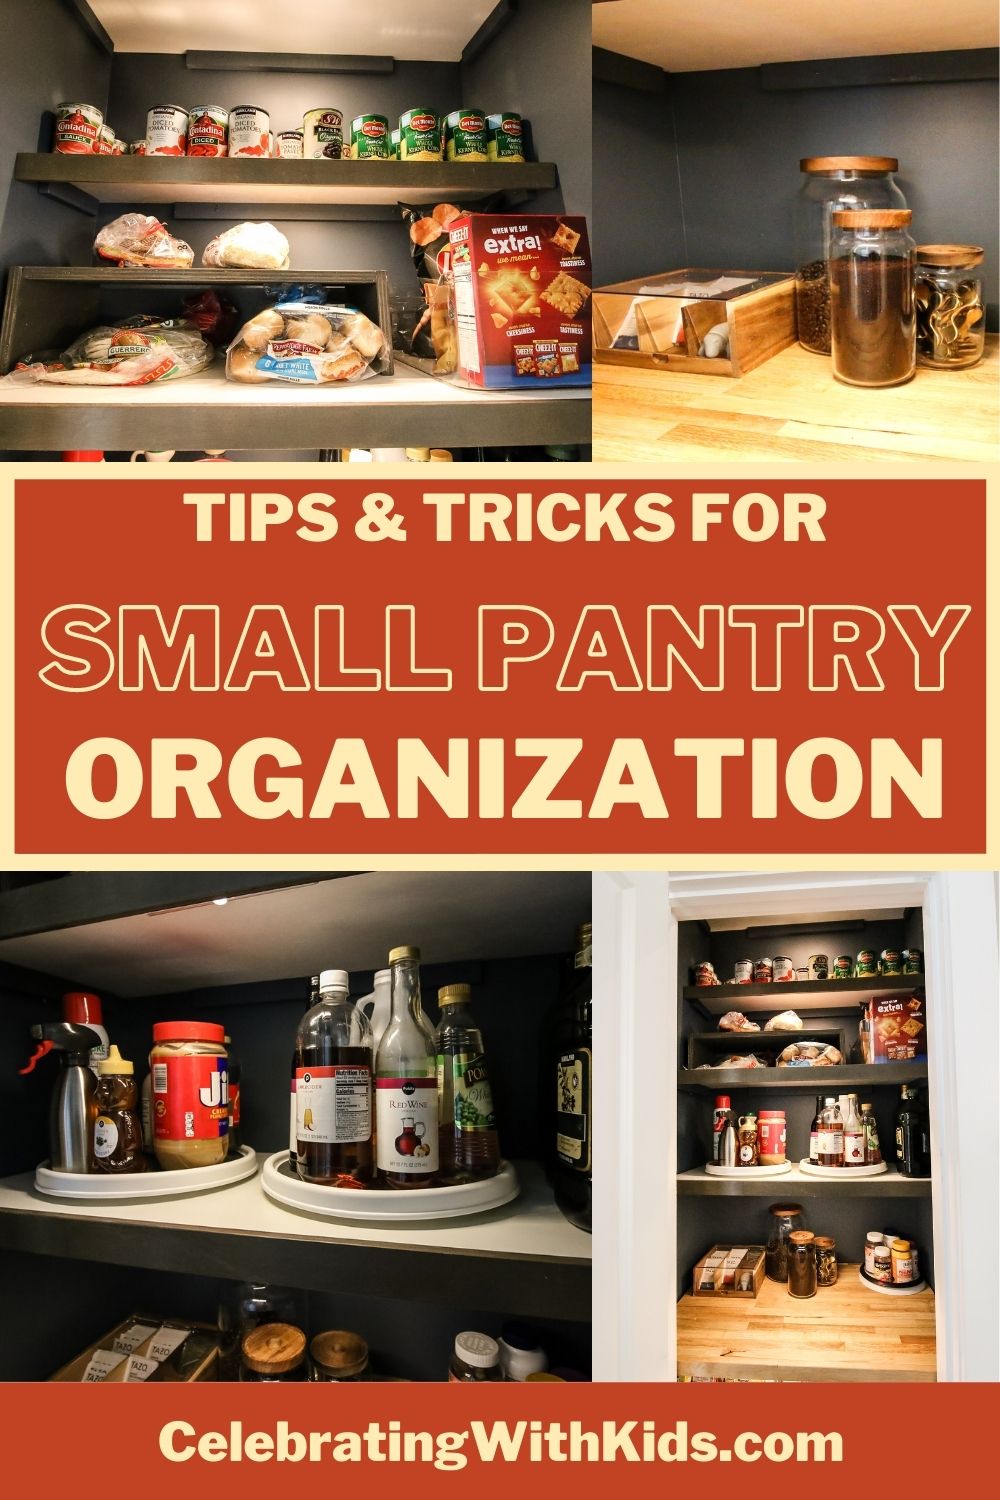 Pantry Organization Ideas